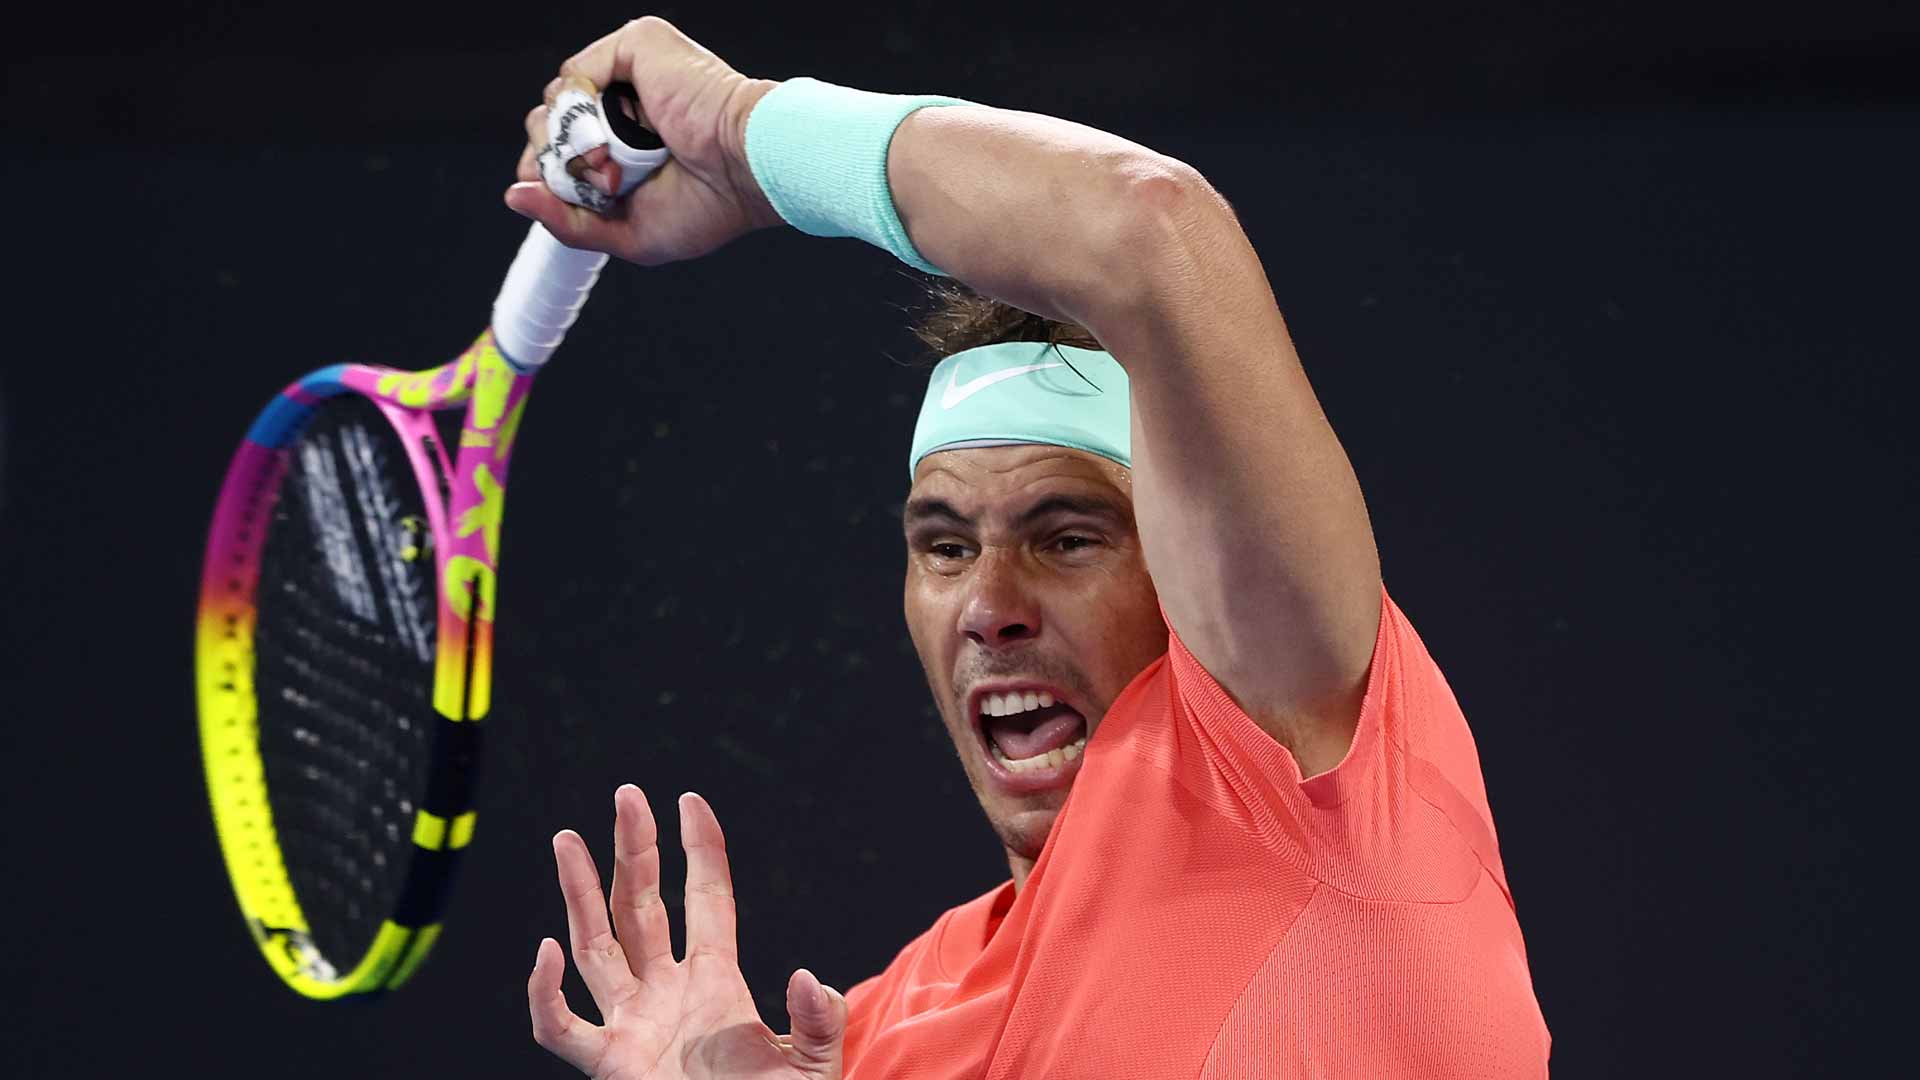 Rafael Nadal reached the Brisbane quarter-finals to start this season.